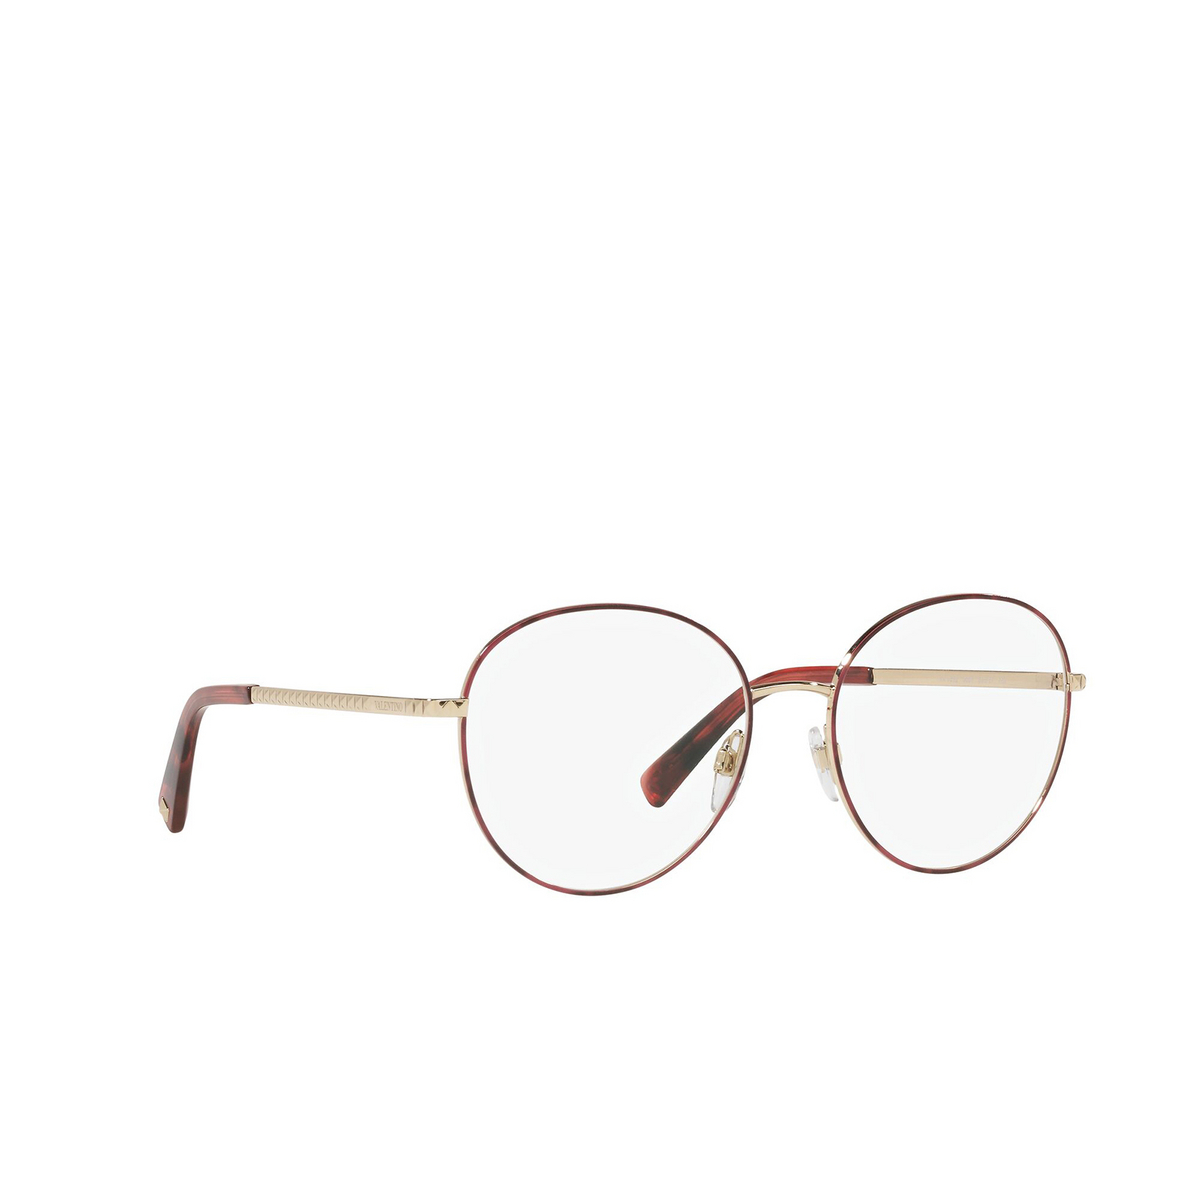 Valentino® Round Sunglasses: VA1025 color Red Havana / Light Gold 3068 - three-quarters view.